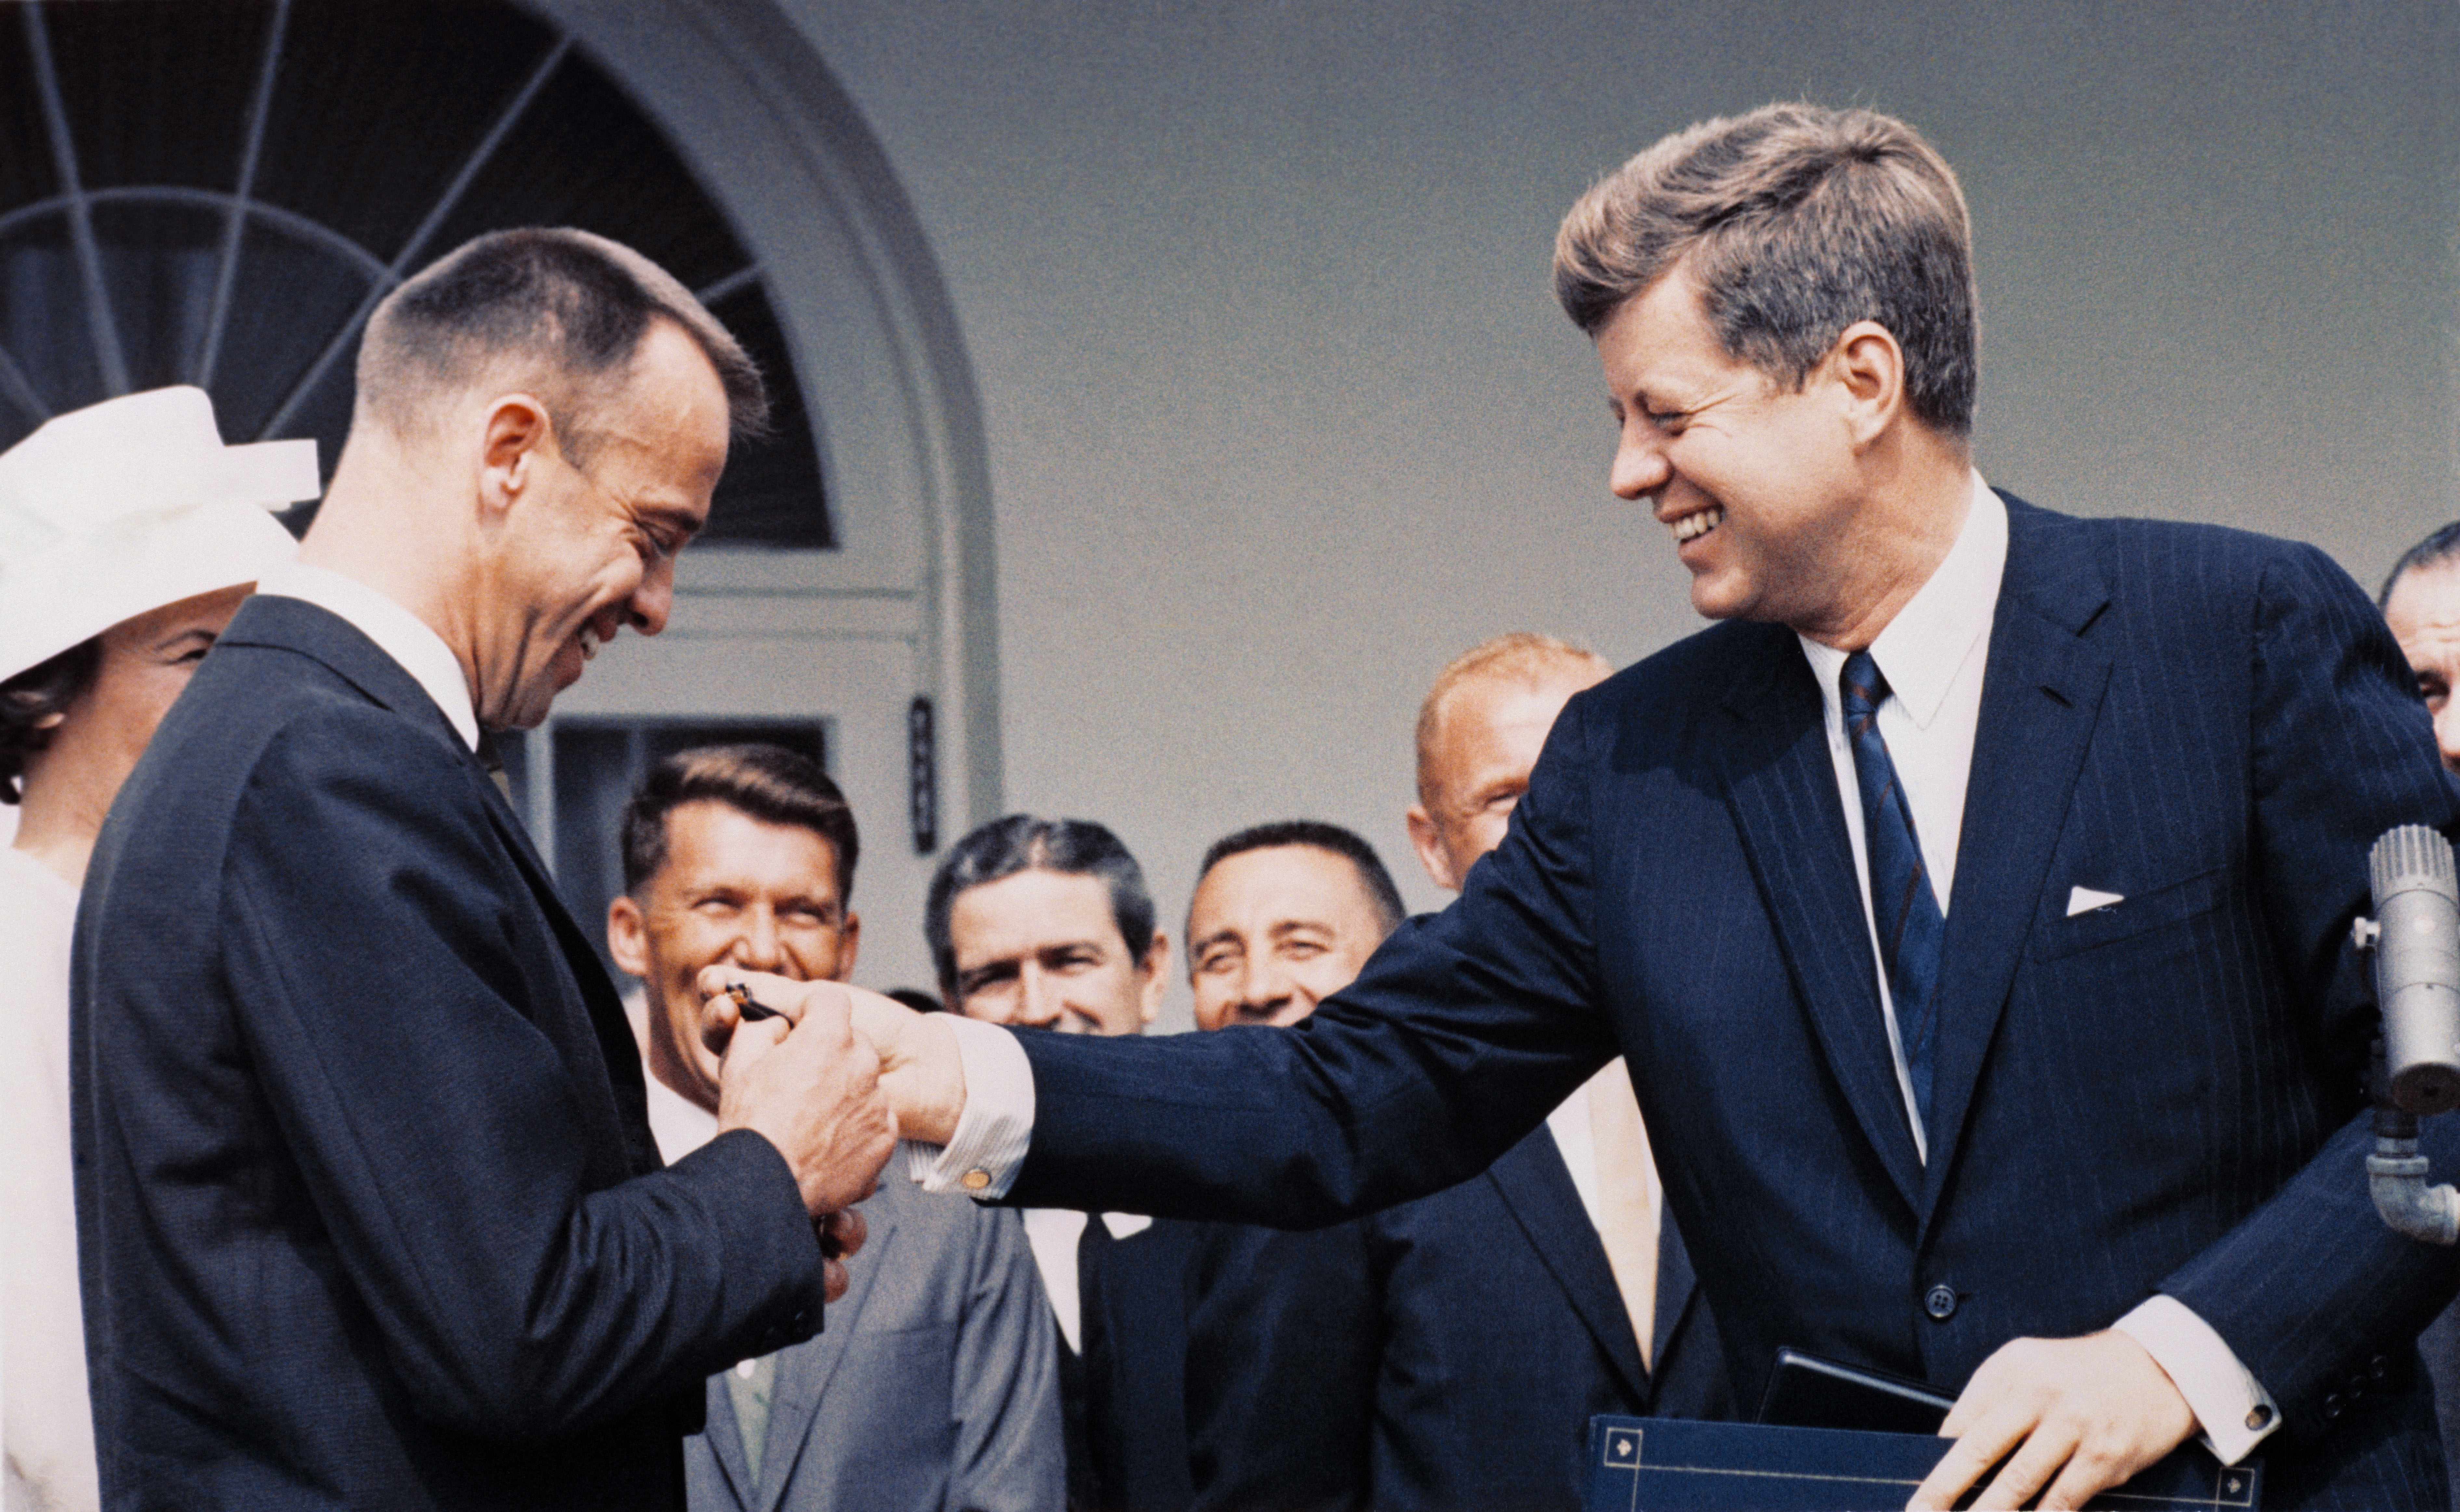 President Kennedy Awards Alan Shepard NASA’s Distinguished Service Medal